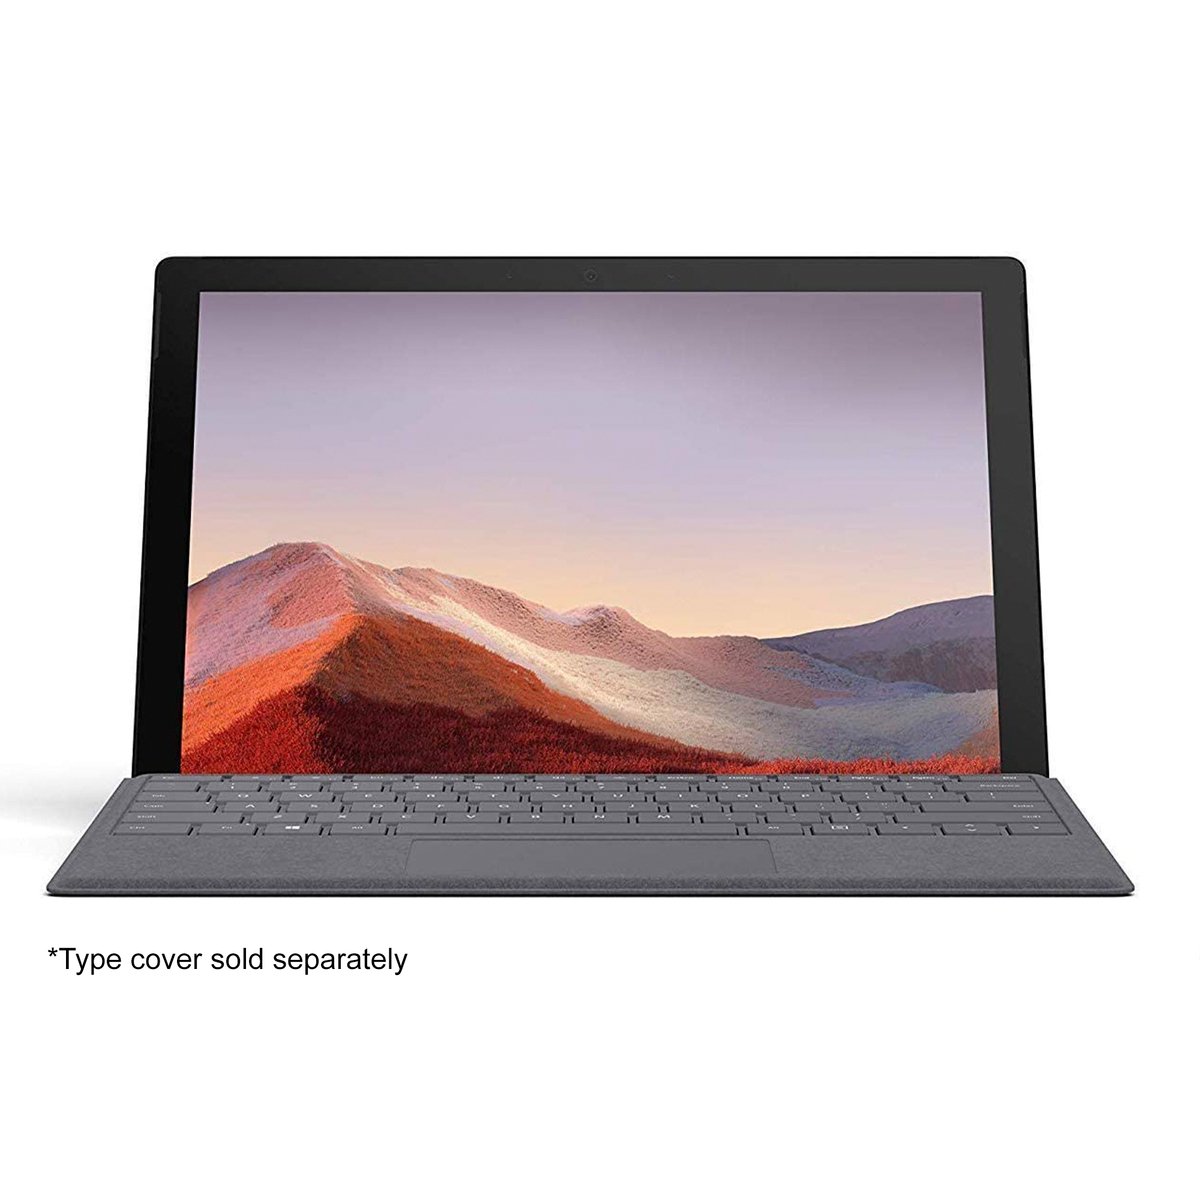 Microsoft Surface Pro 7 (VAT-00020), 2-in-1 Laptop, Intel Core i7-1065G7, 12.3 Inch, 512GB SSD, 16GB RAM, Intel Iris Plus Graphics, Windows 10, No Keyboard, Black